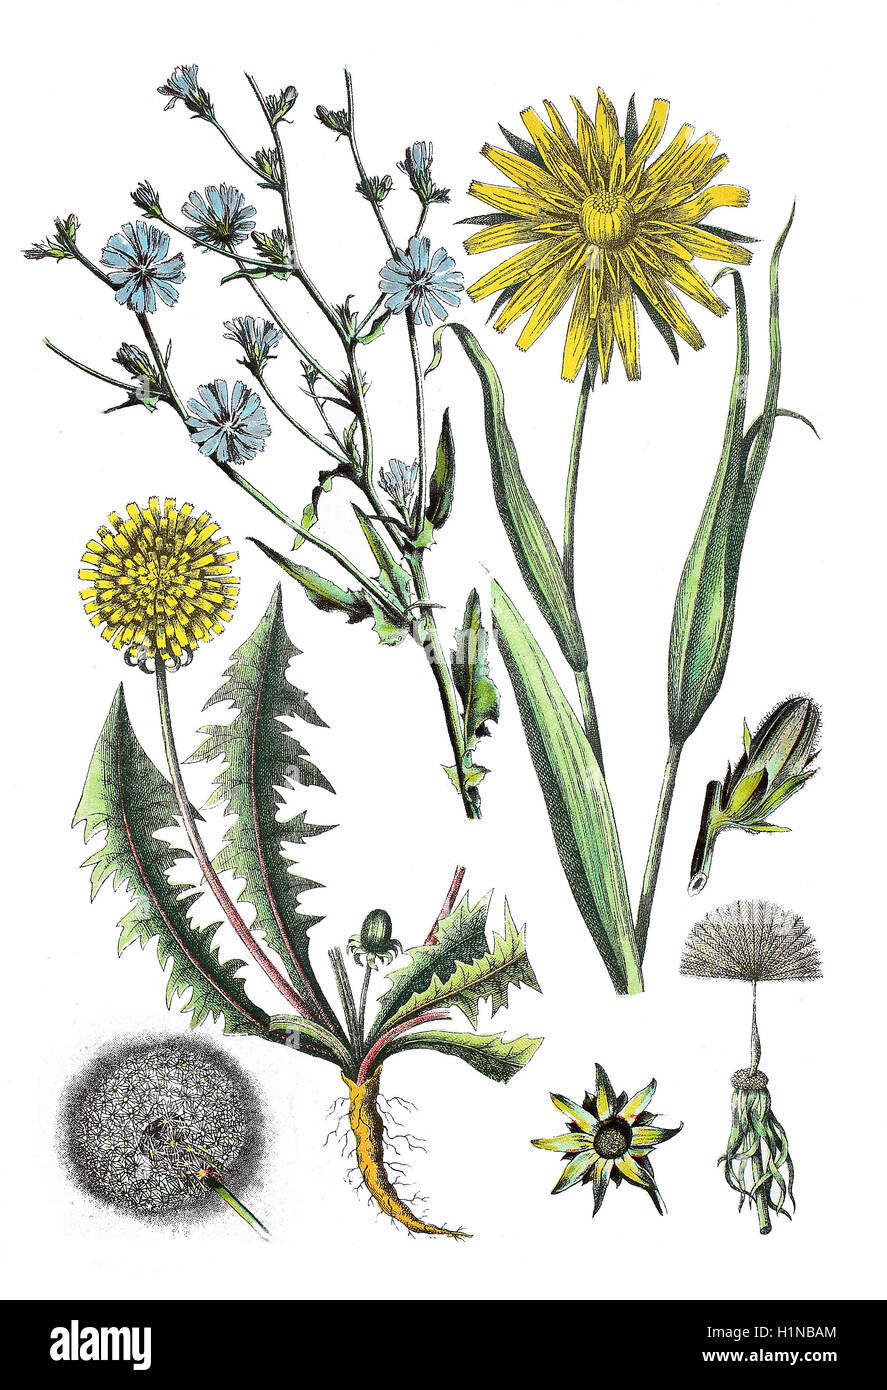 Common chicory, Cichorium intybus, (top left), meadow salsify, showy goat's-beard, Tragopogon pratensis (right top), dandelion, Taraxacum sect. Ruderalia (bottem) Stock Photo